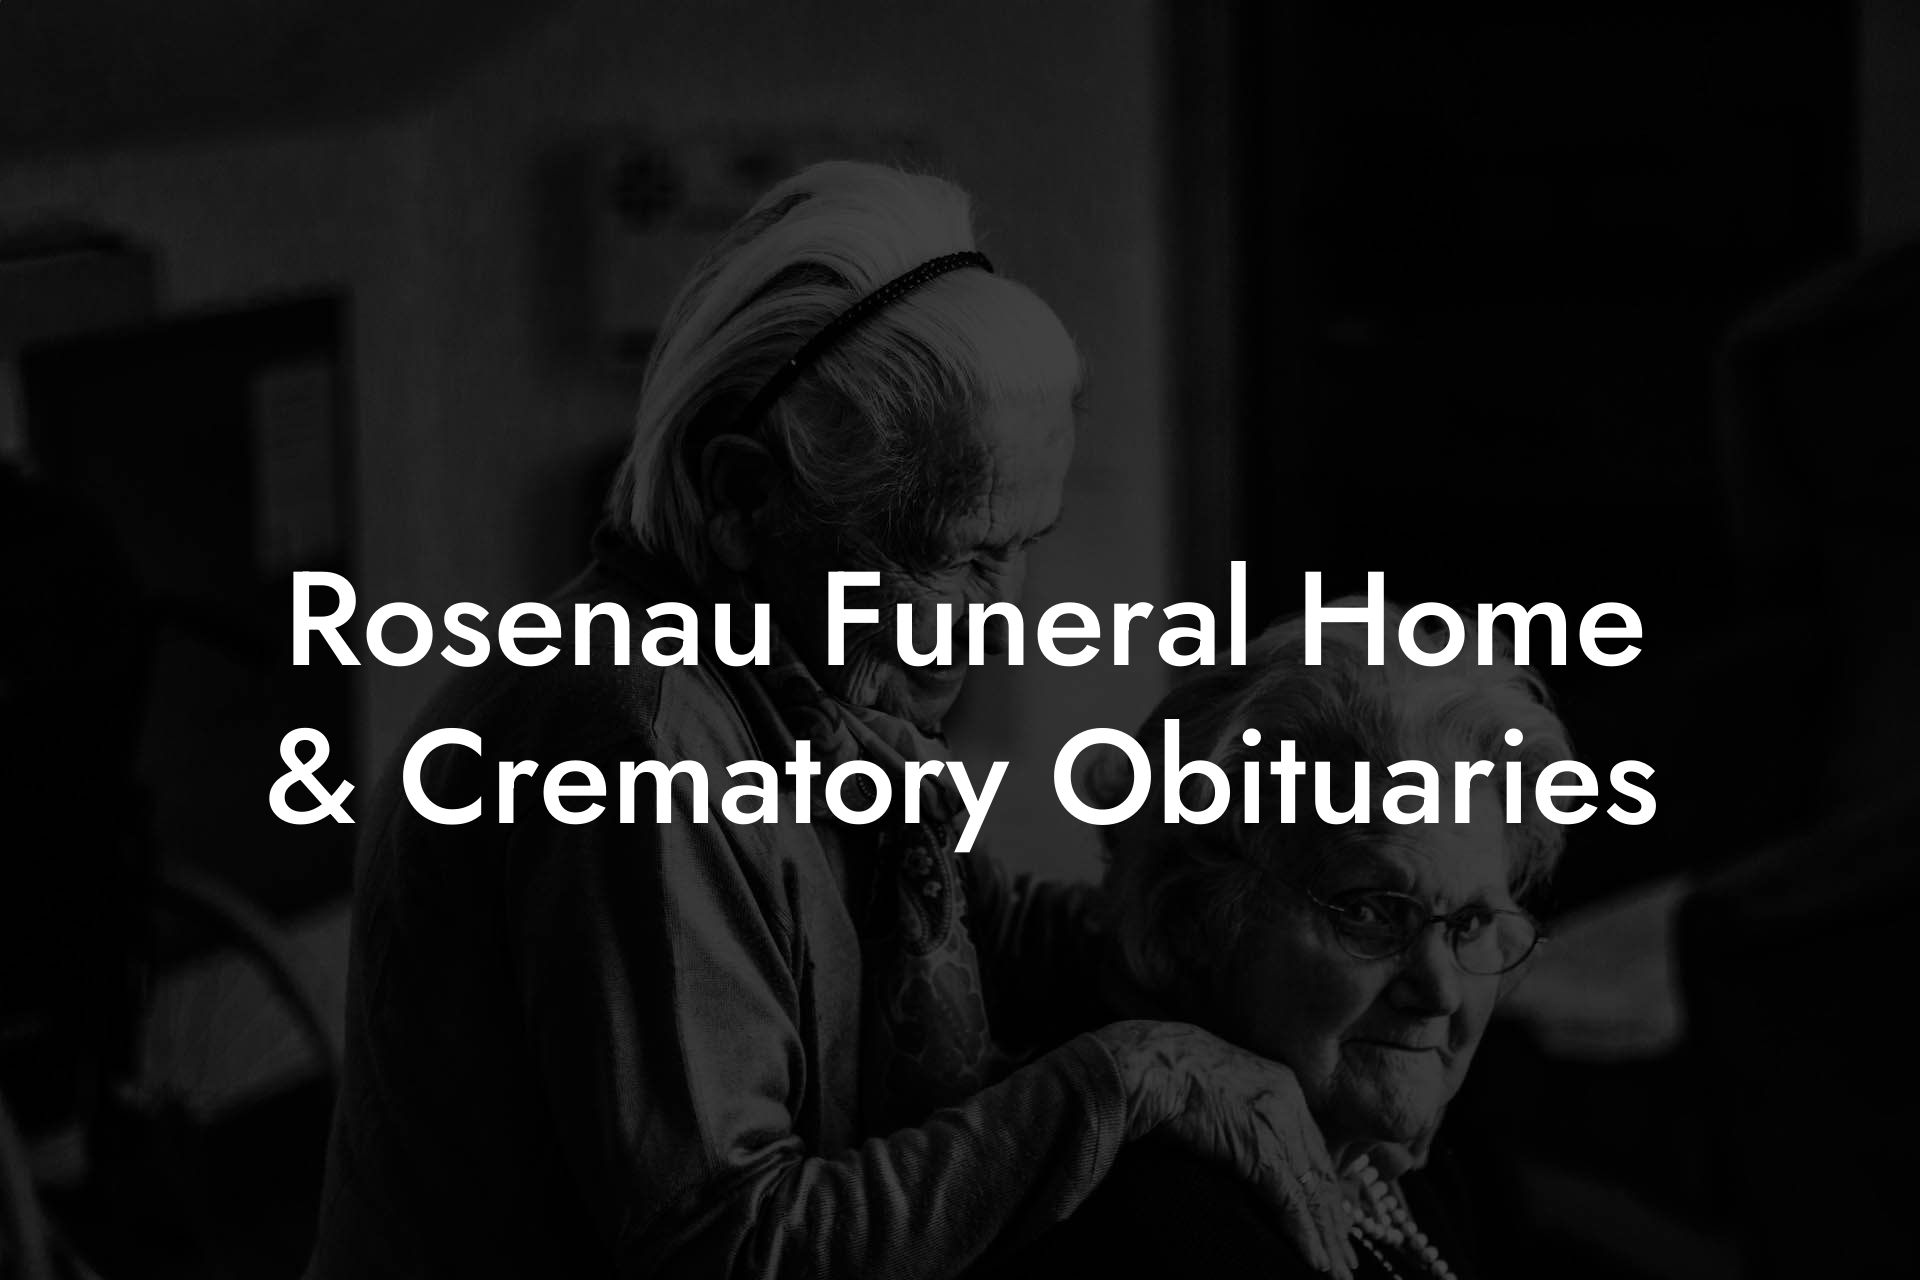 Rosenau Funeral Home & Crematory Obituaries